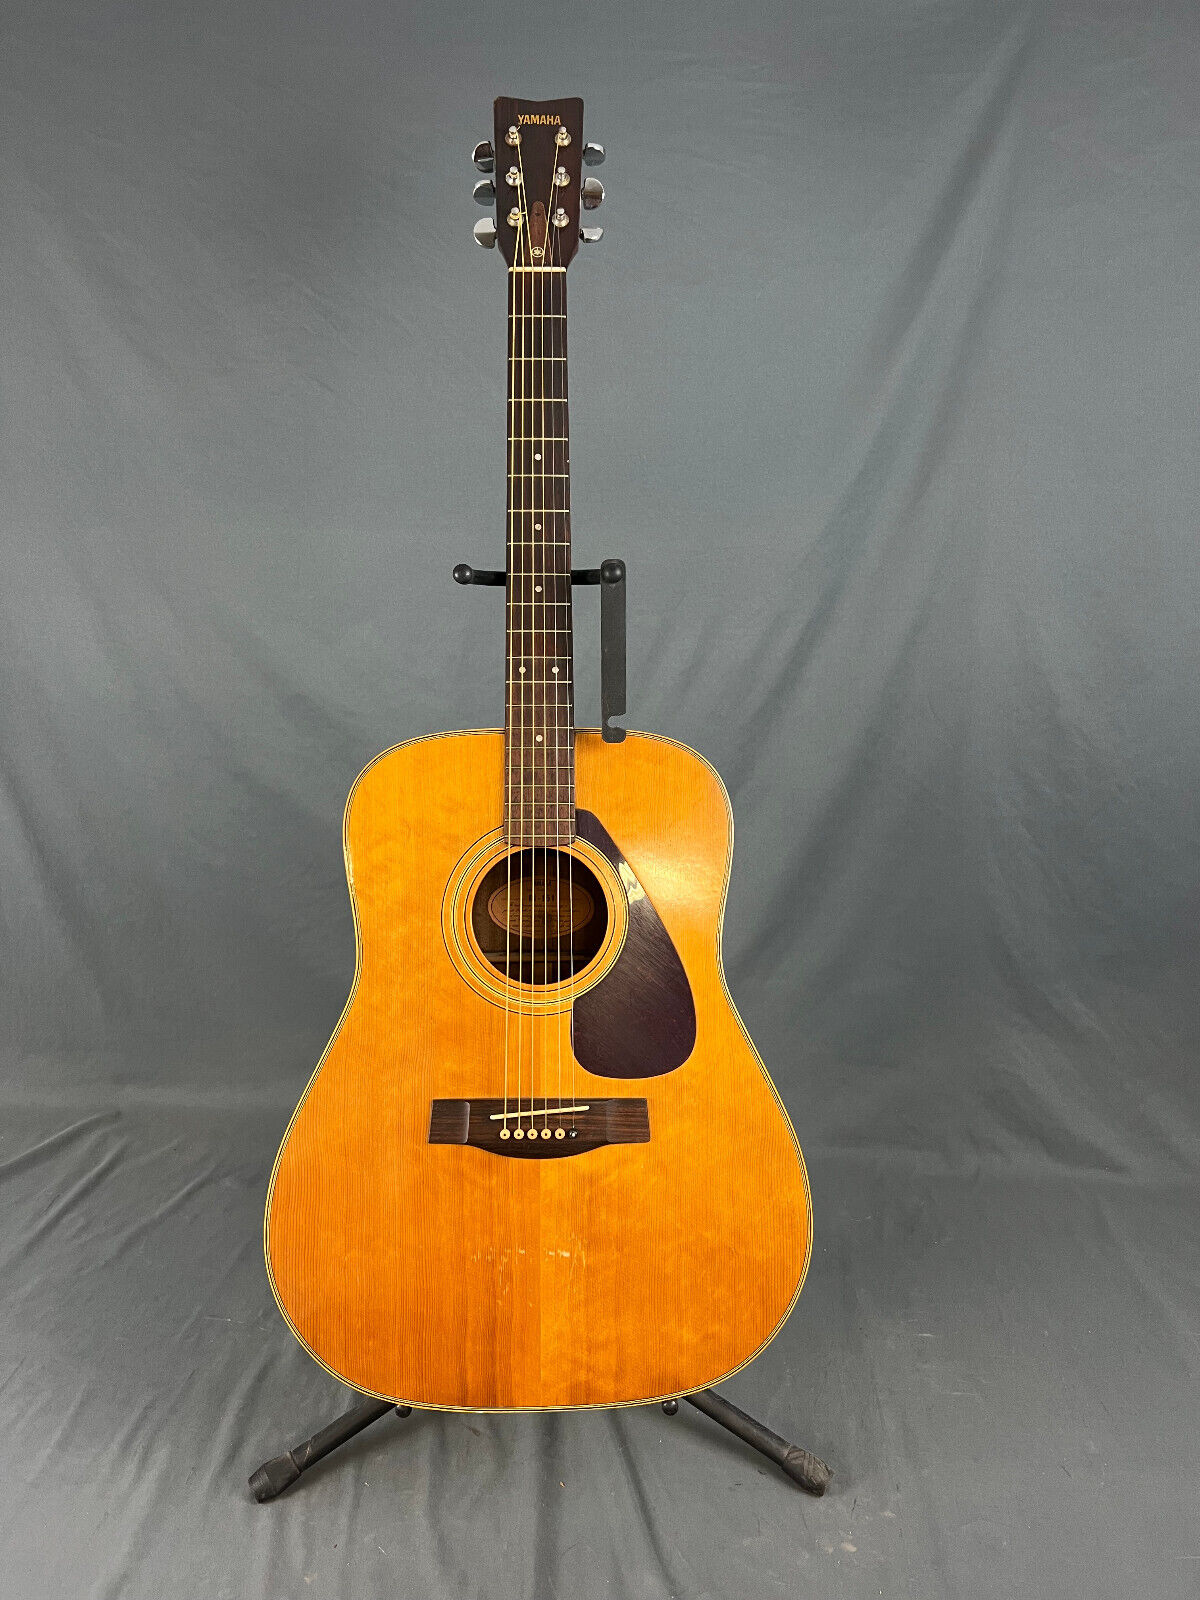 Yamaha FG-151 Acoustic Guitar, Orange label, Made in Japan, 1978 | eBay